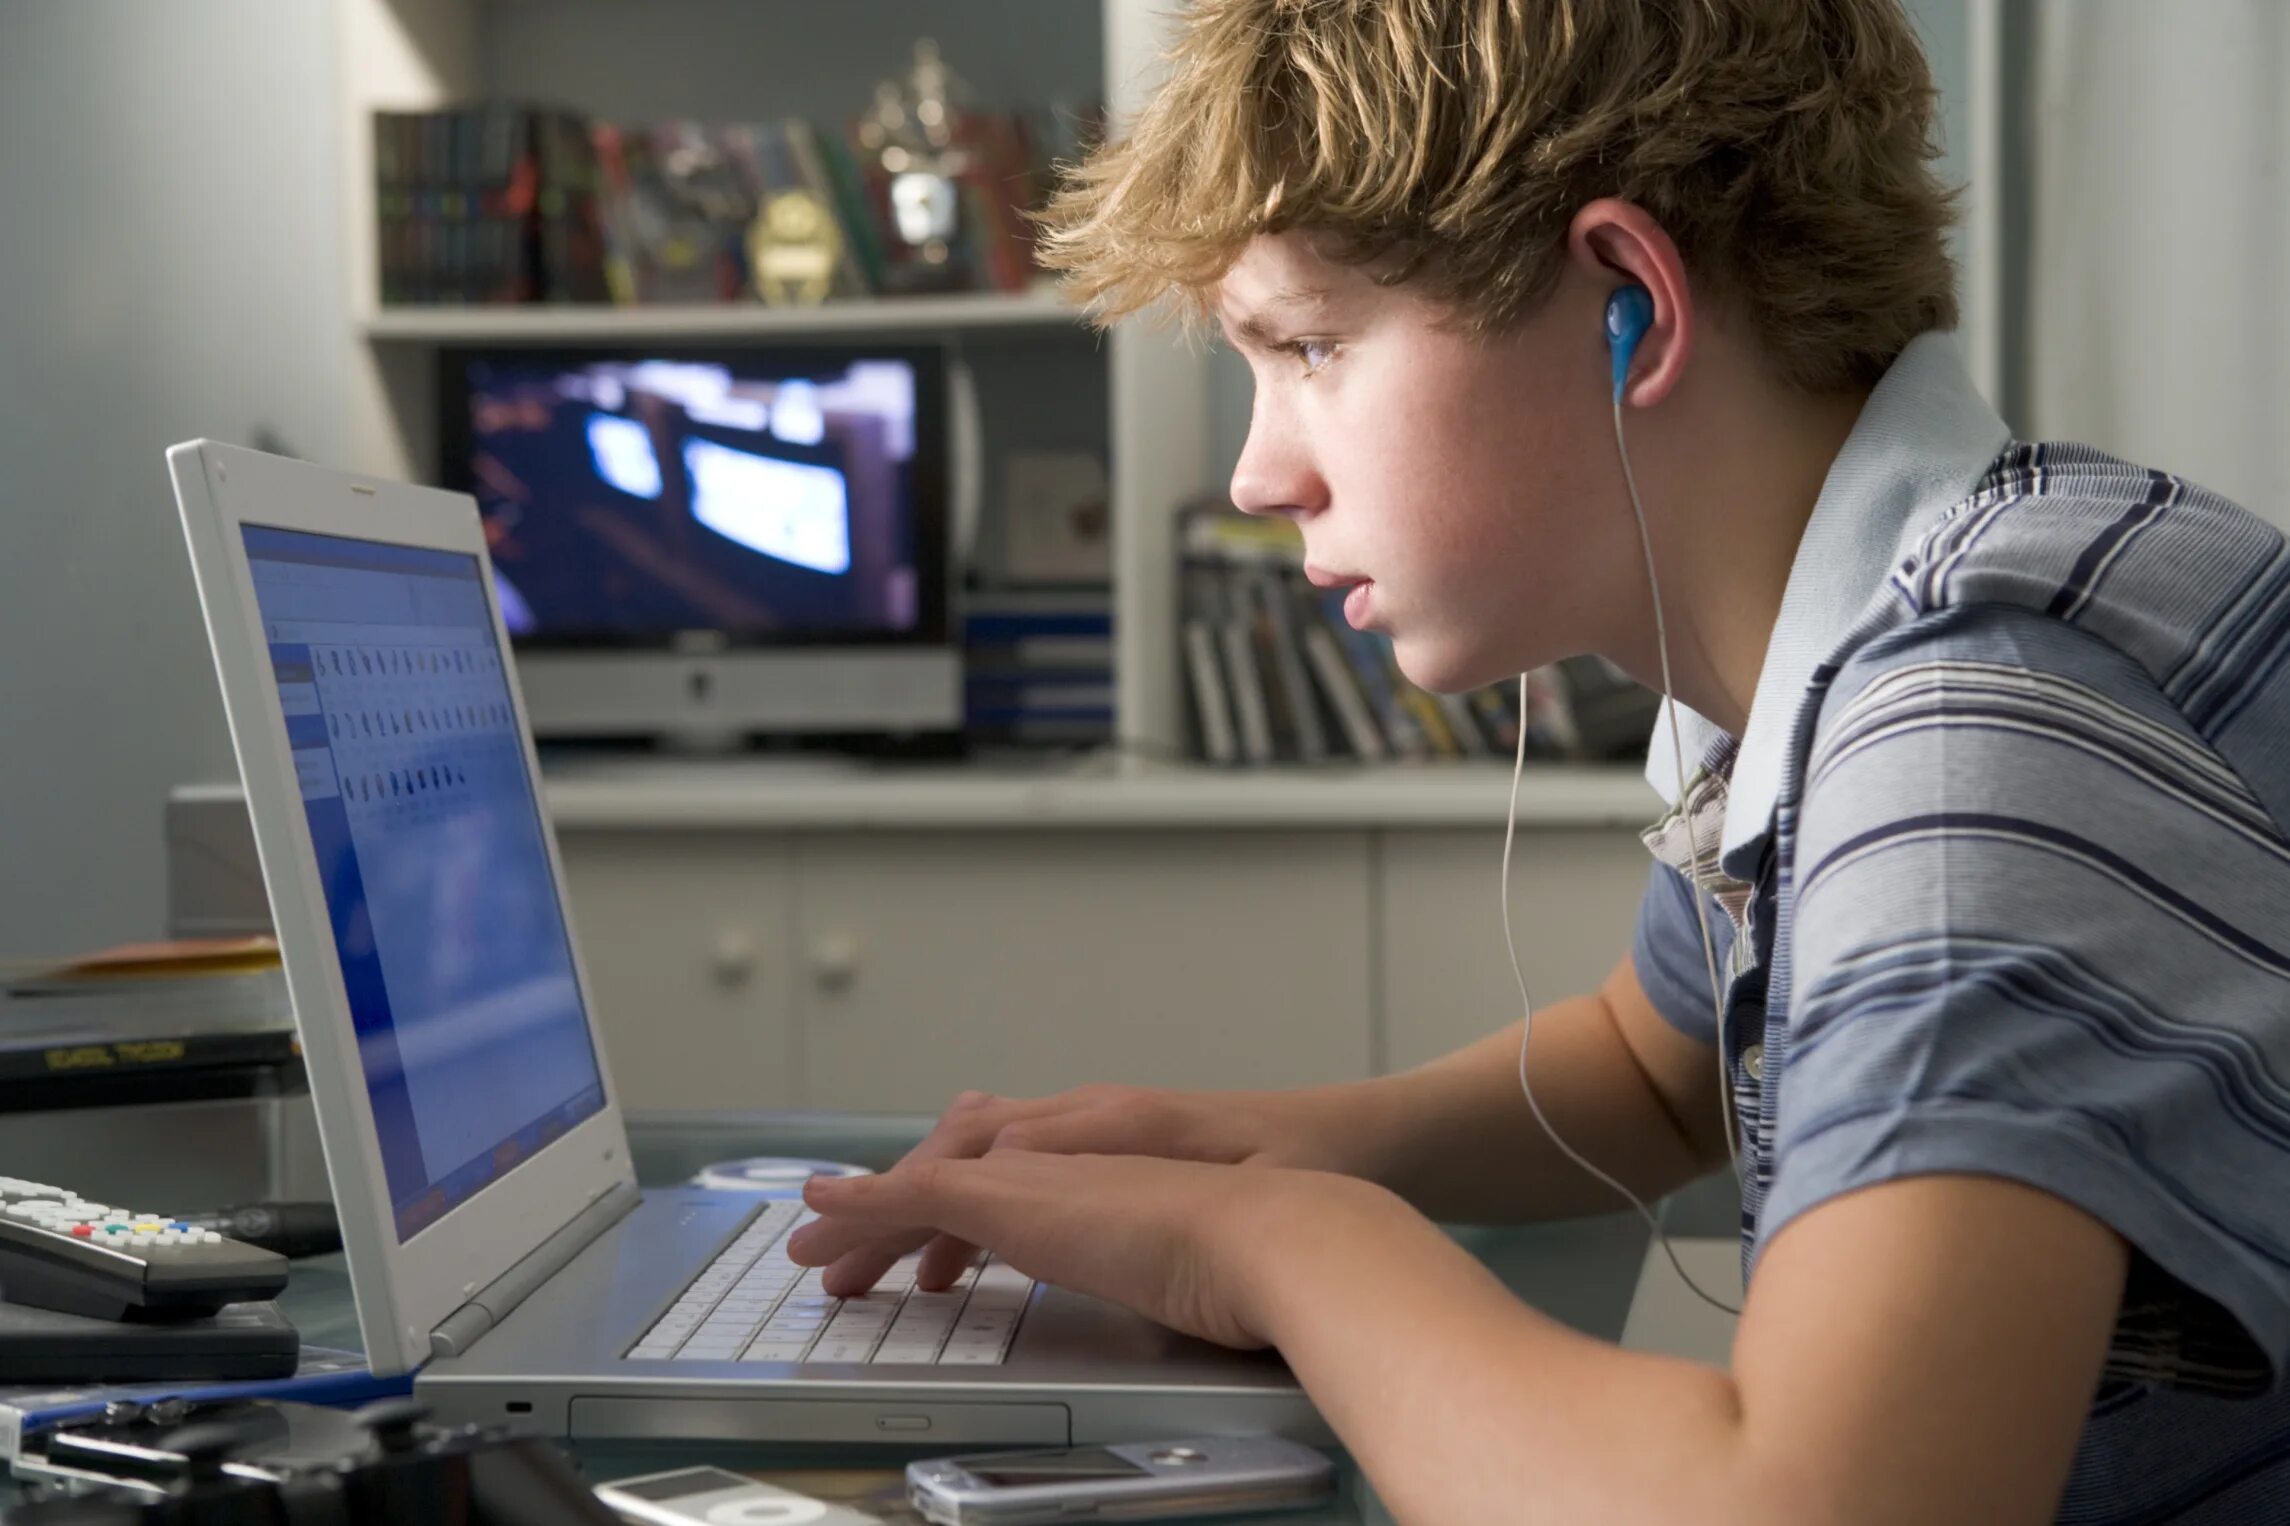 Подросток за компьютером. Подросток и компьютер. Подросток играющий в компьютер. Ребенок за компьютером.